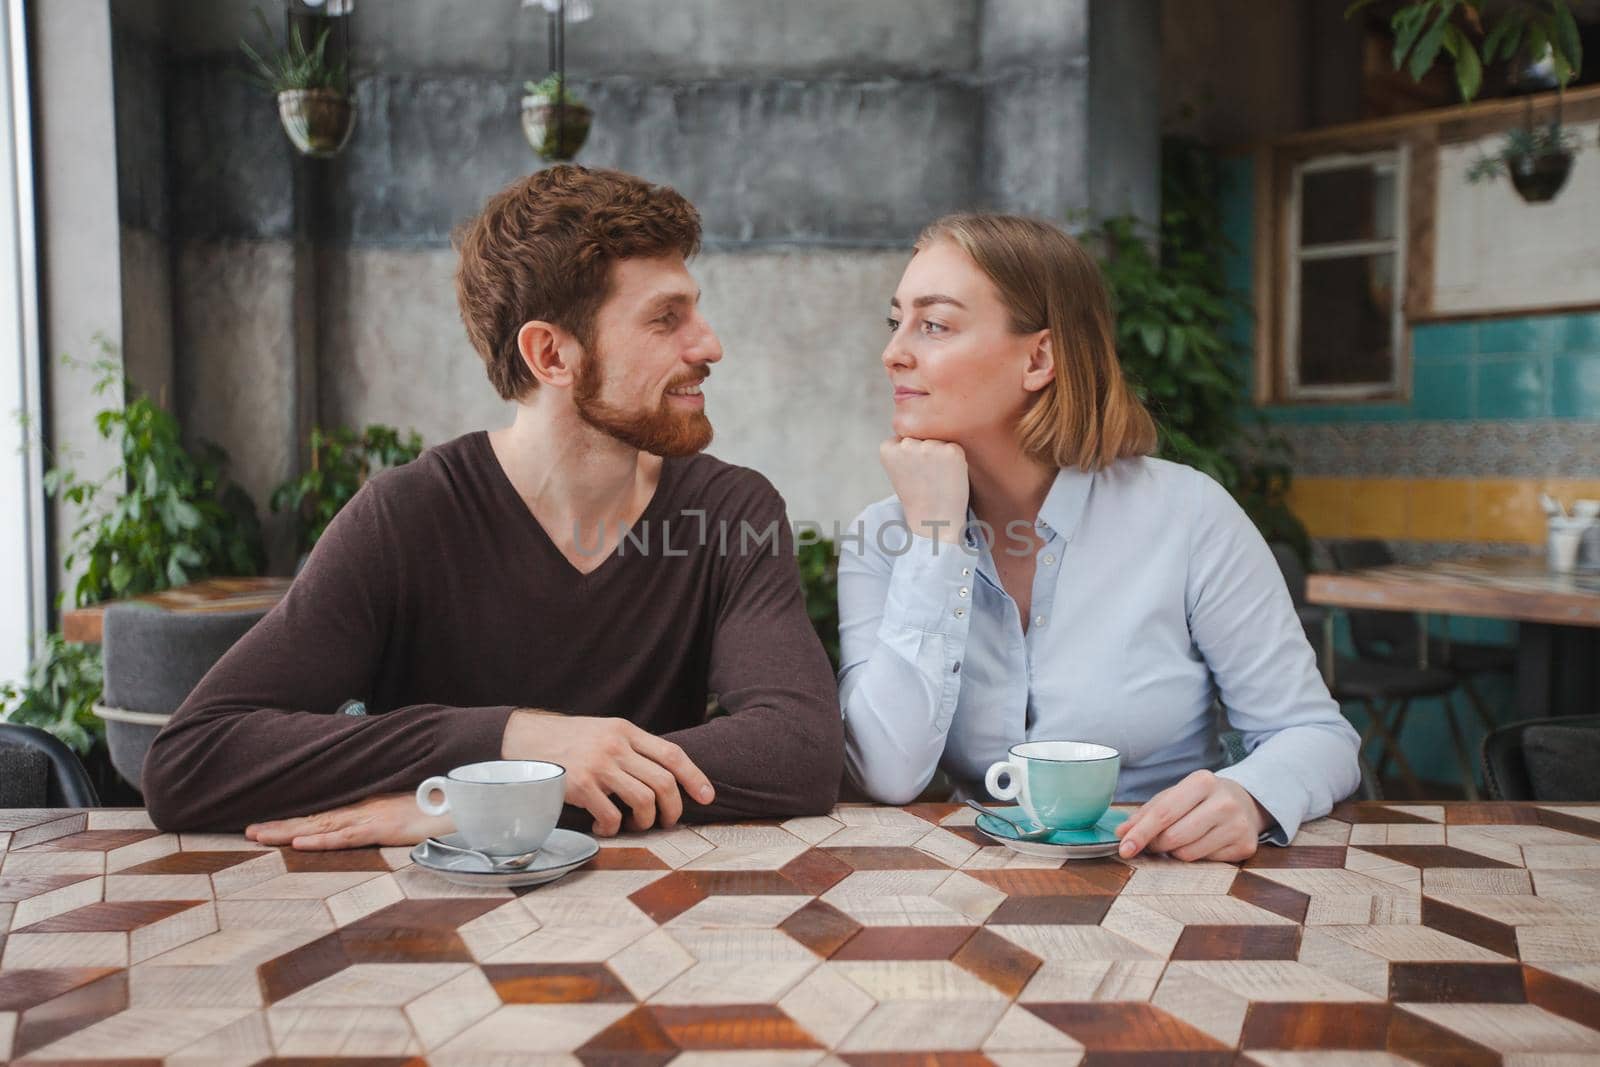 Cheerful couple having coffee by Demkat